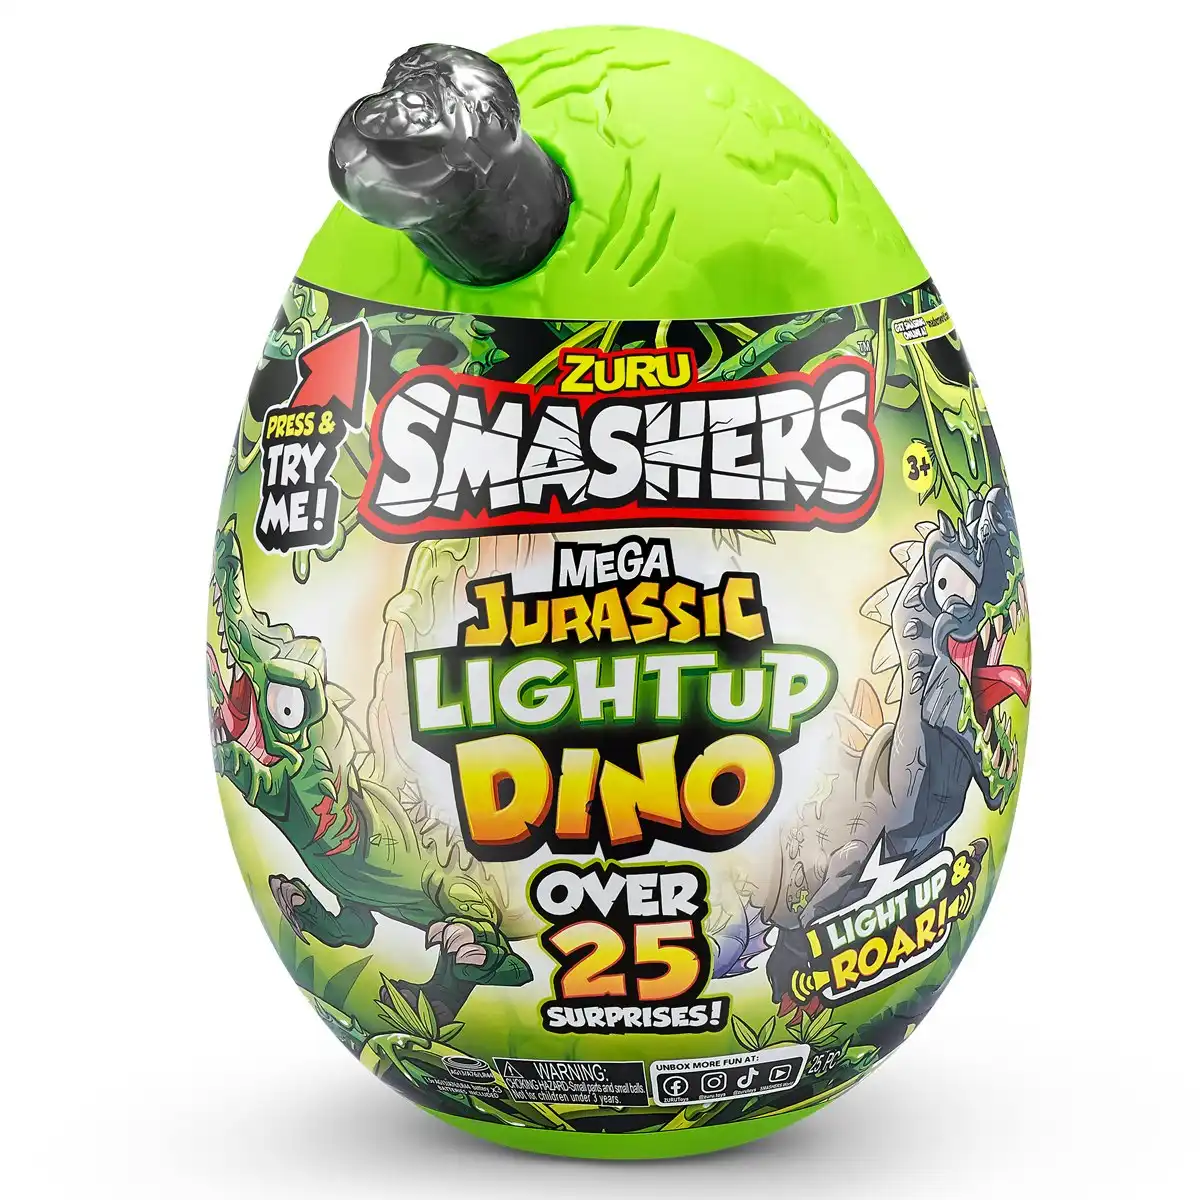 ZURU - Smashers Mega Jurassic Light Up Egg Surprise - Assorted Styles (chosen At Random)